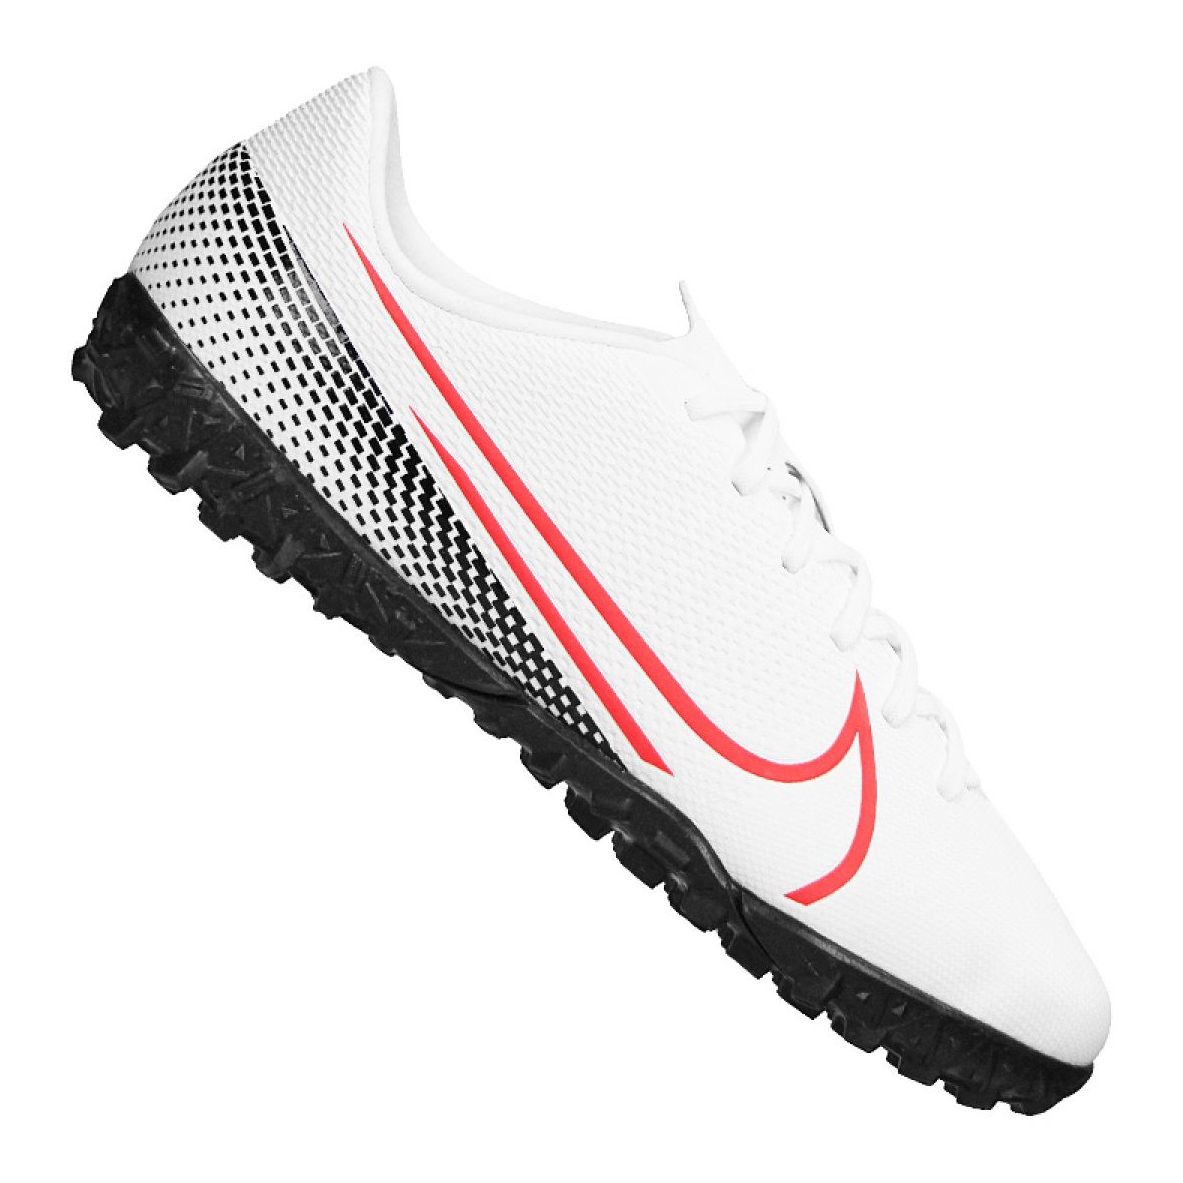 Buty piłkarskie Nike Vapor 13 Academy Tf Jr AT8145-160 białe